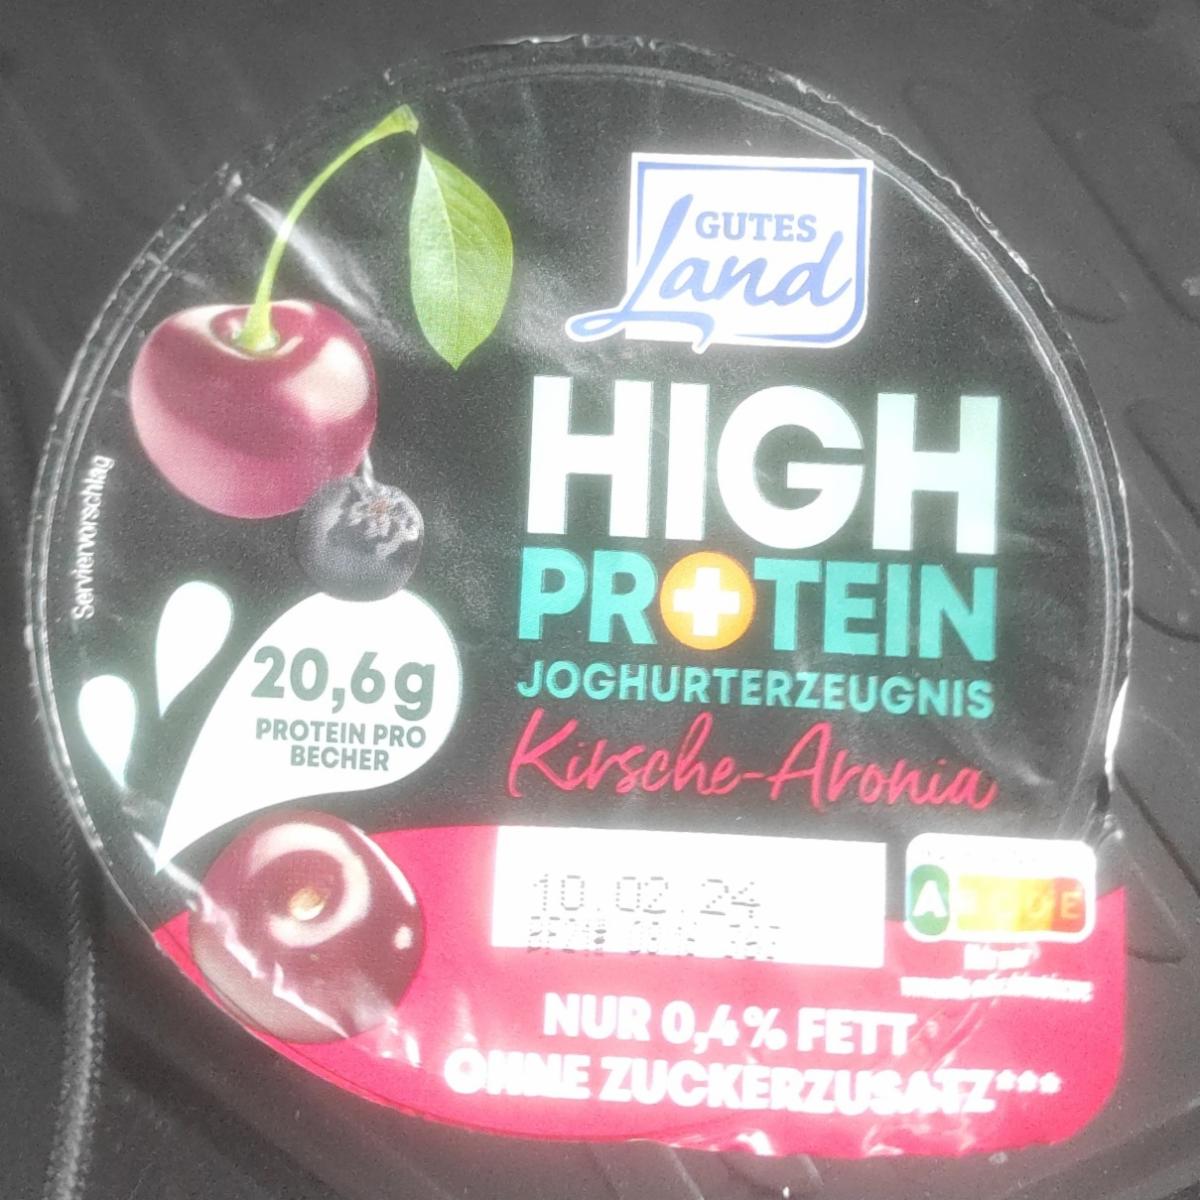 Zdjęcia - High Protein Joghurterzeugnis Kirsche-Aronia Gutes Land